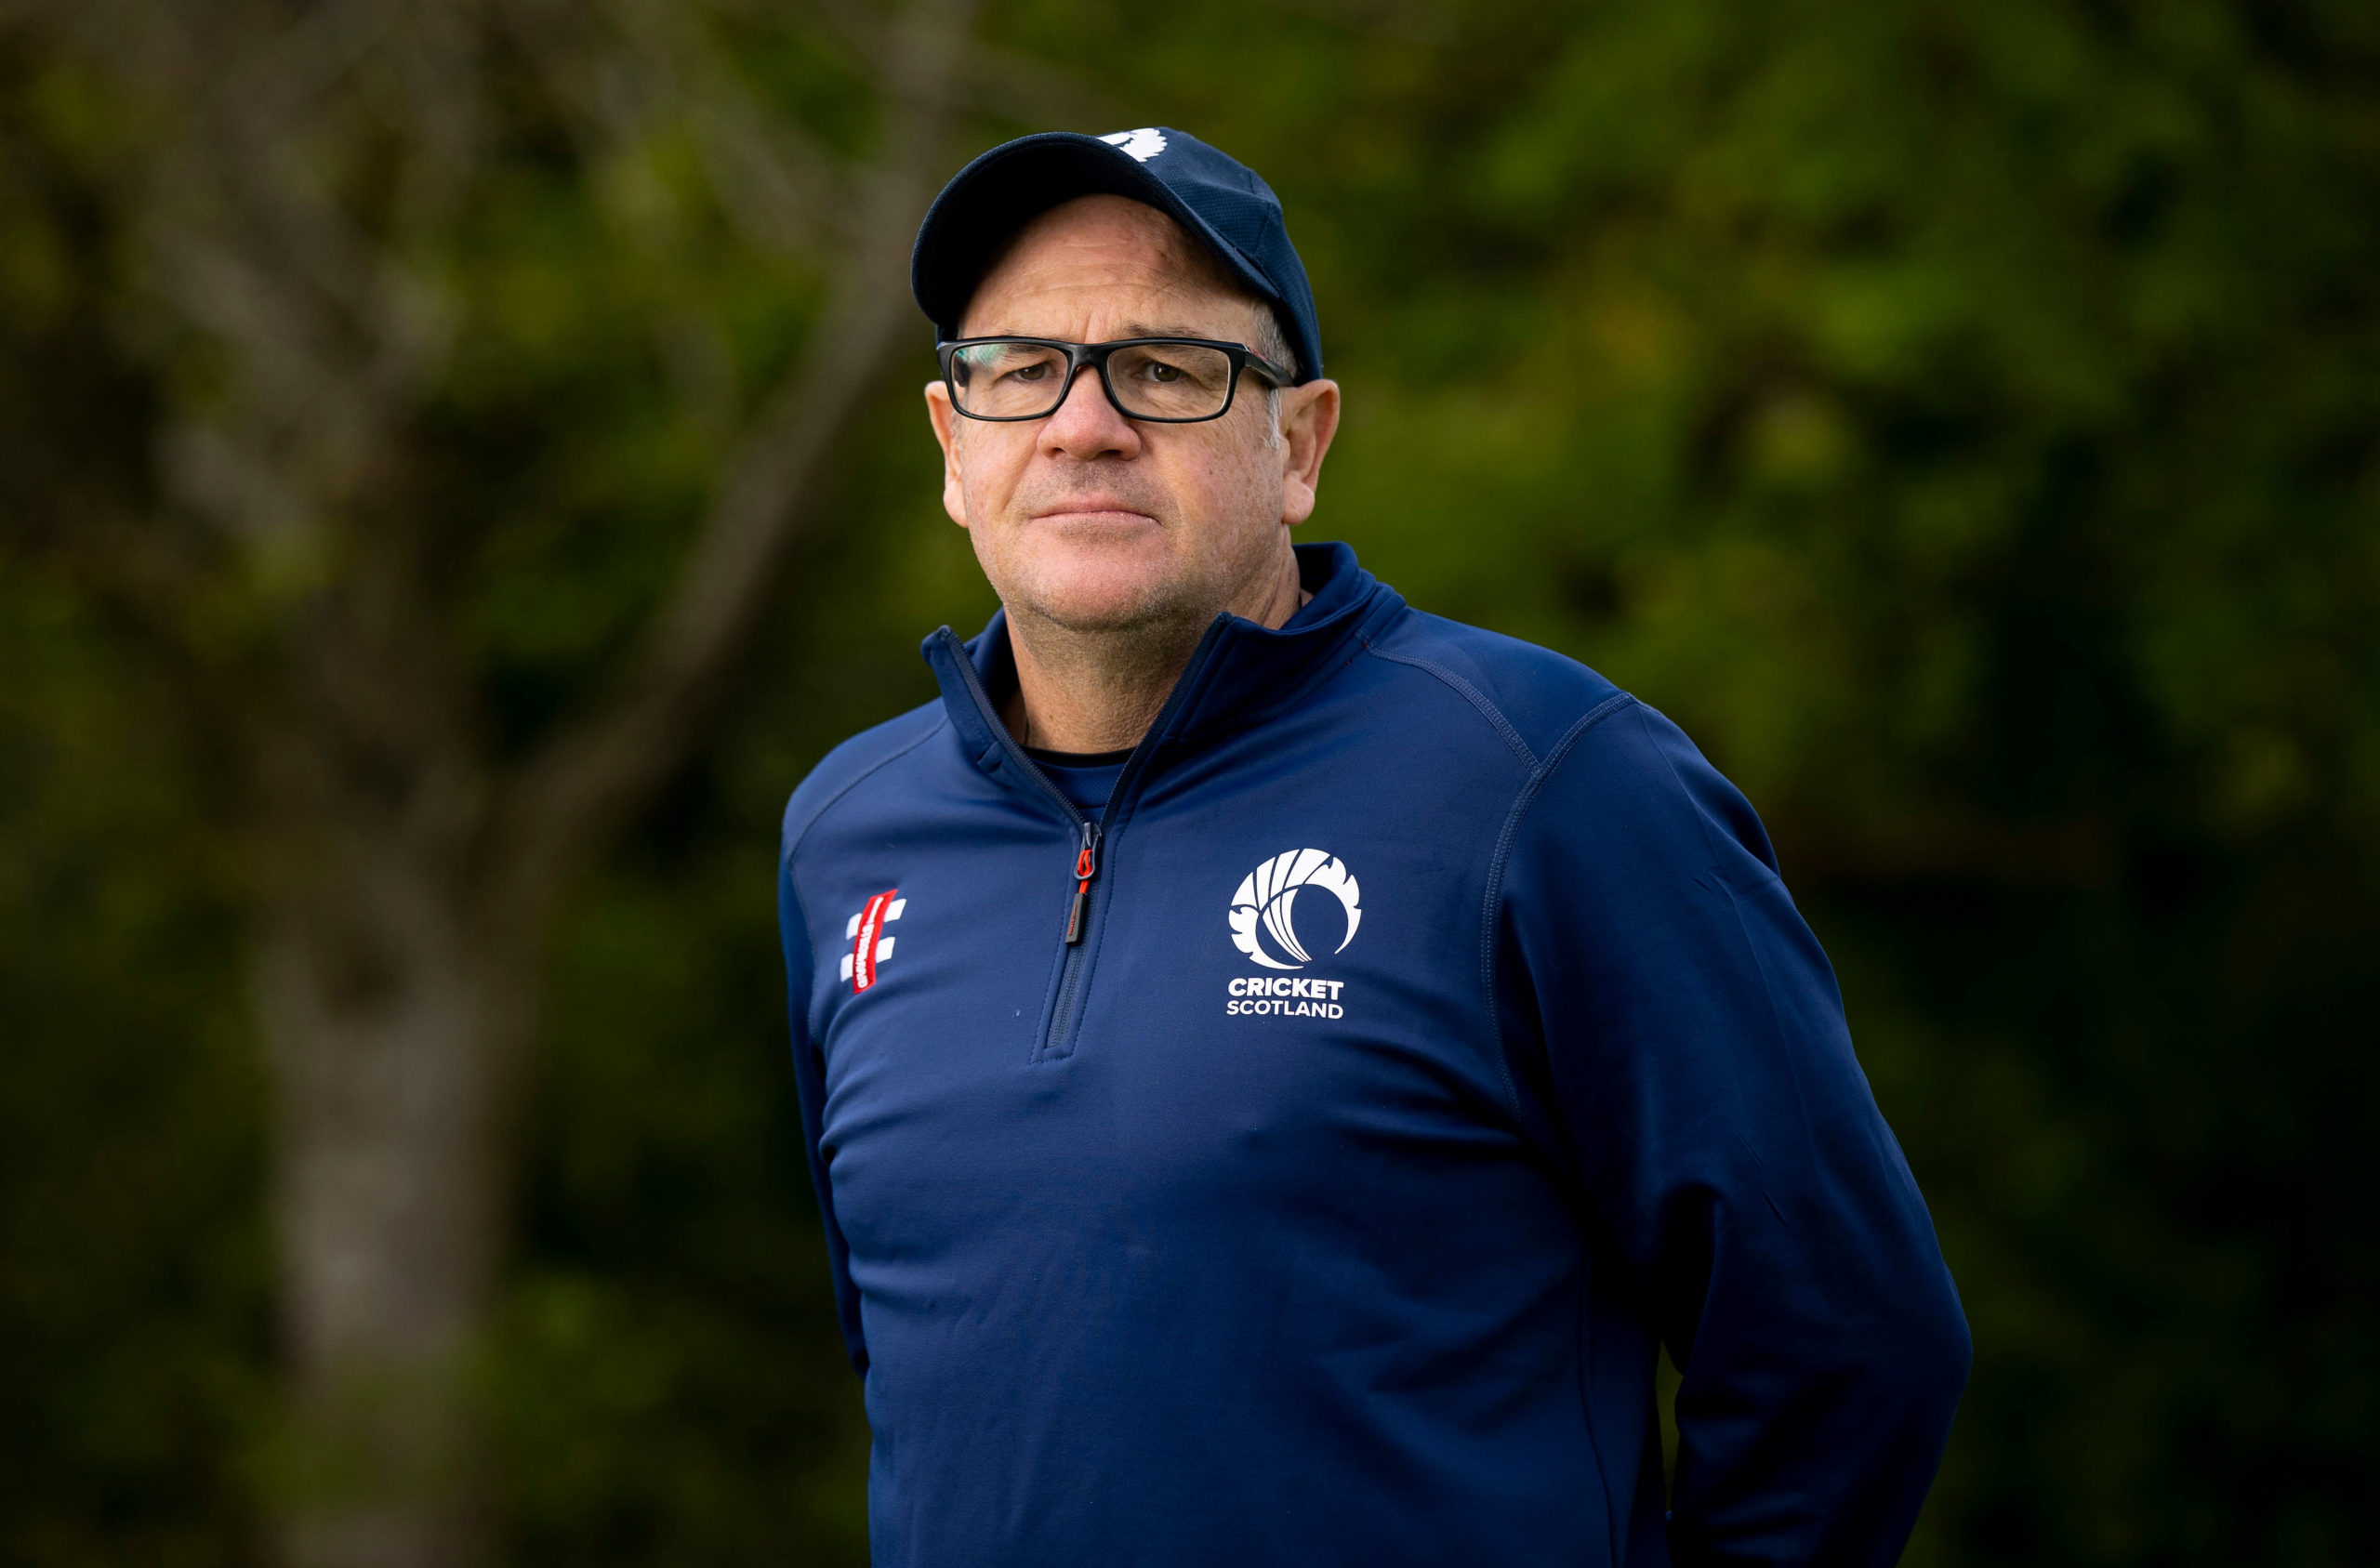 Scotland women’s head coach Mark Coles to leave Cricket Scotland